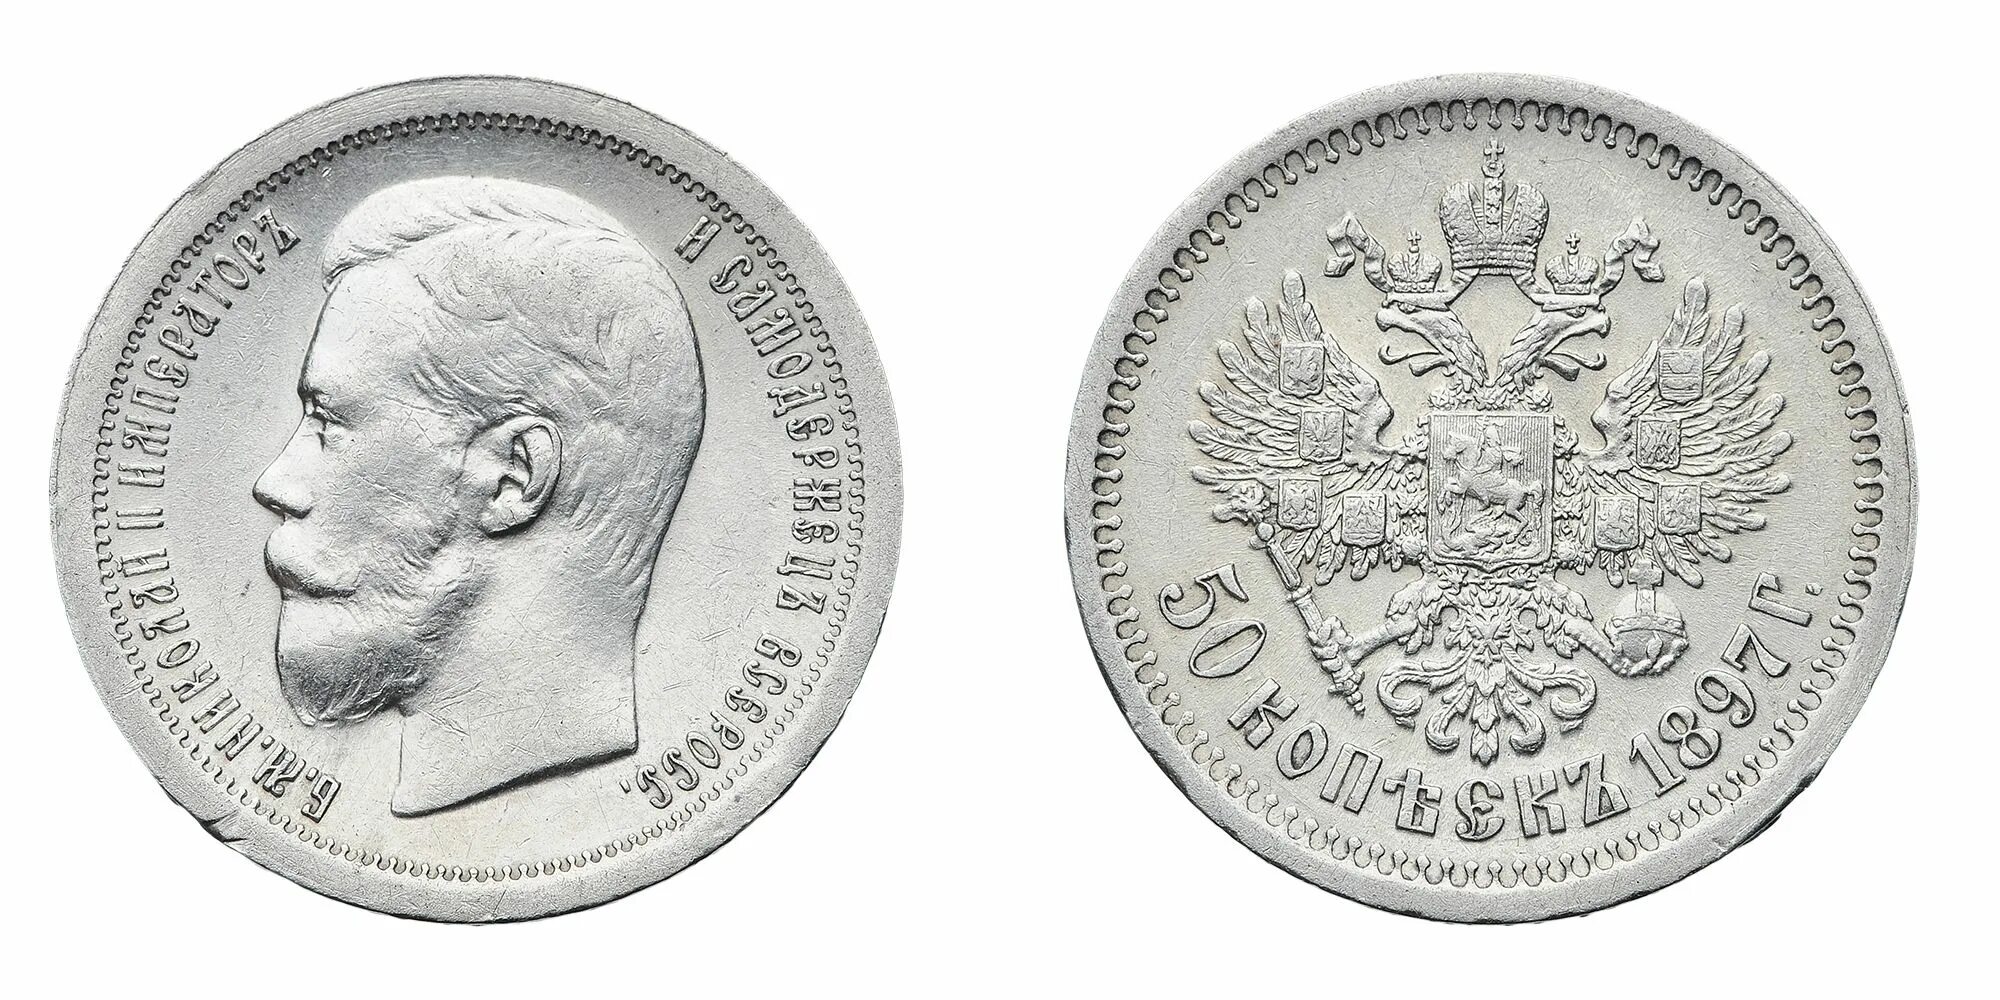 50 копеек 1897 года. 50 Копеек 1897 *. Царский рубль серебряный 1899 года. Монета 50 копеек 1897 года.